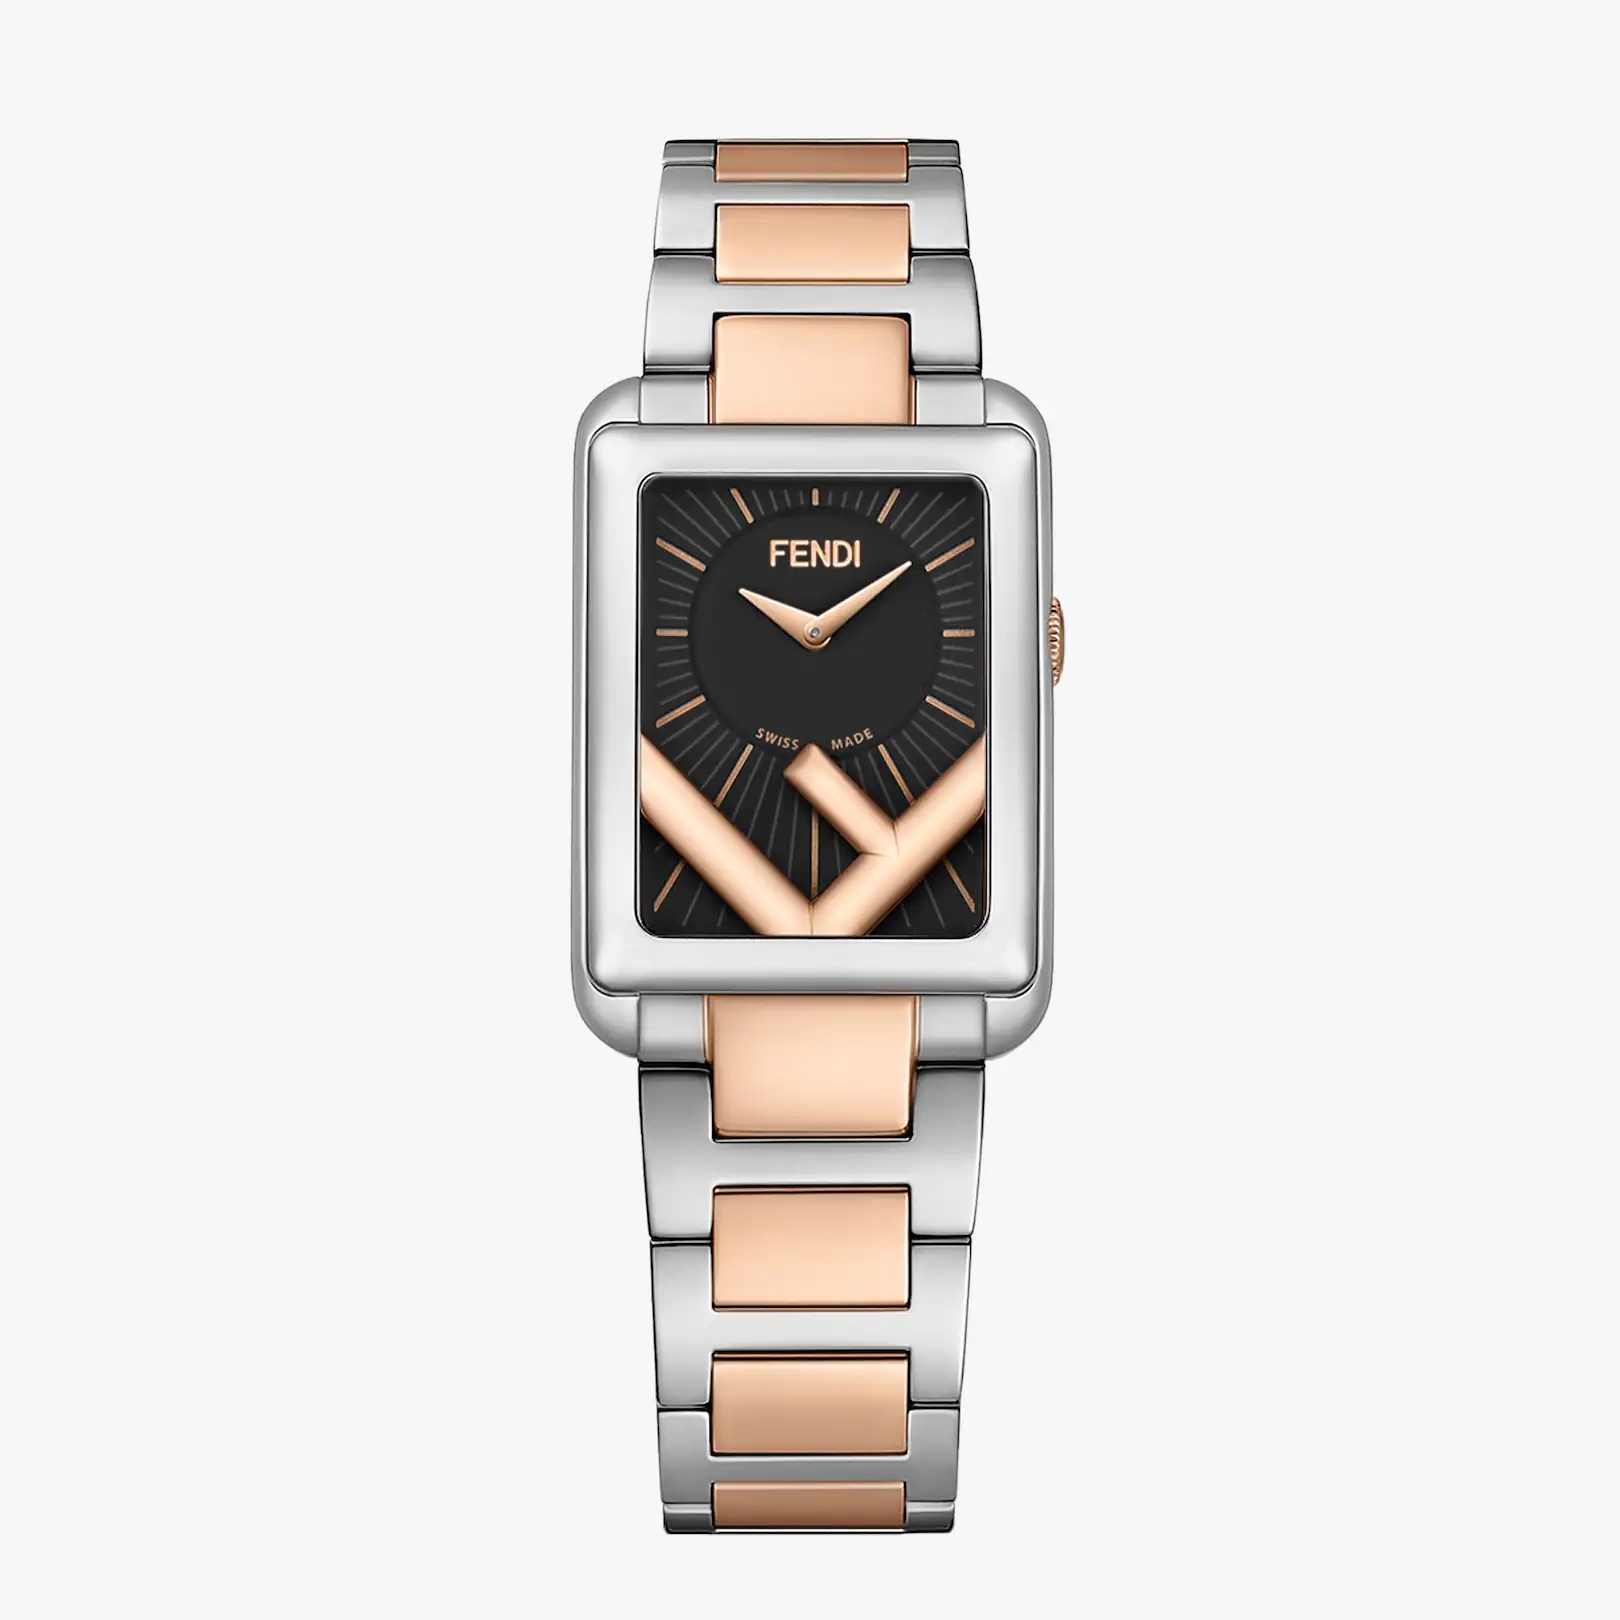 22.5 x 32 MM - Watch with F is Fendi logo - 1